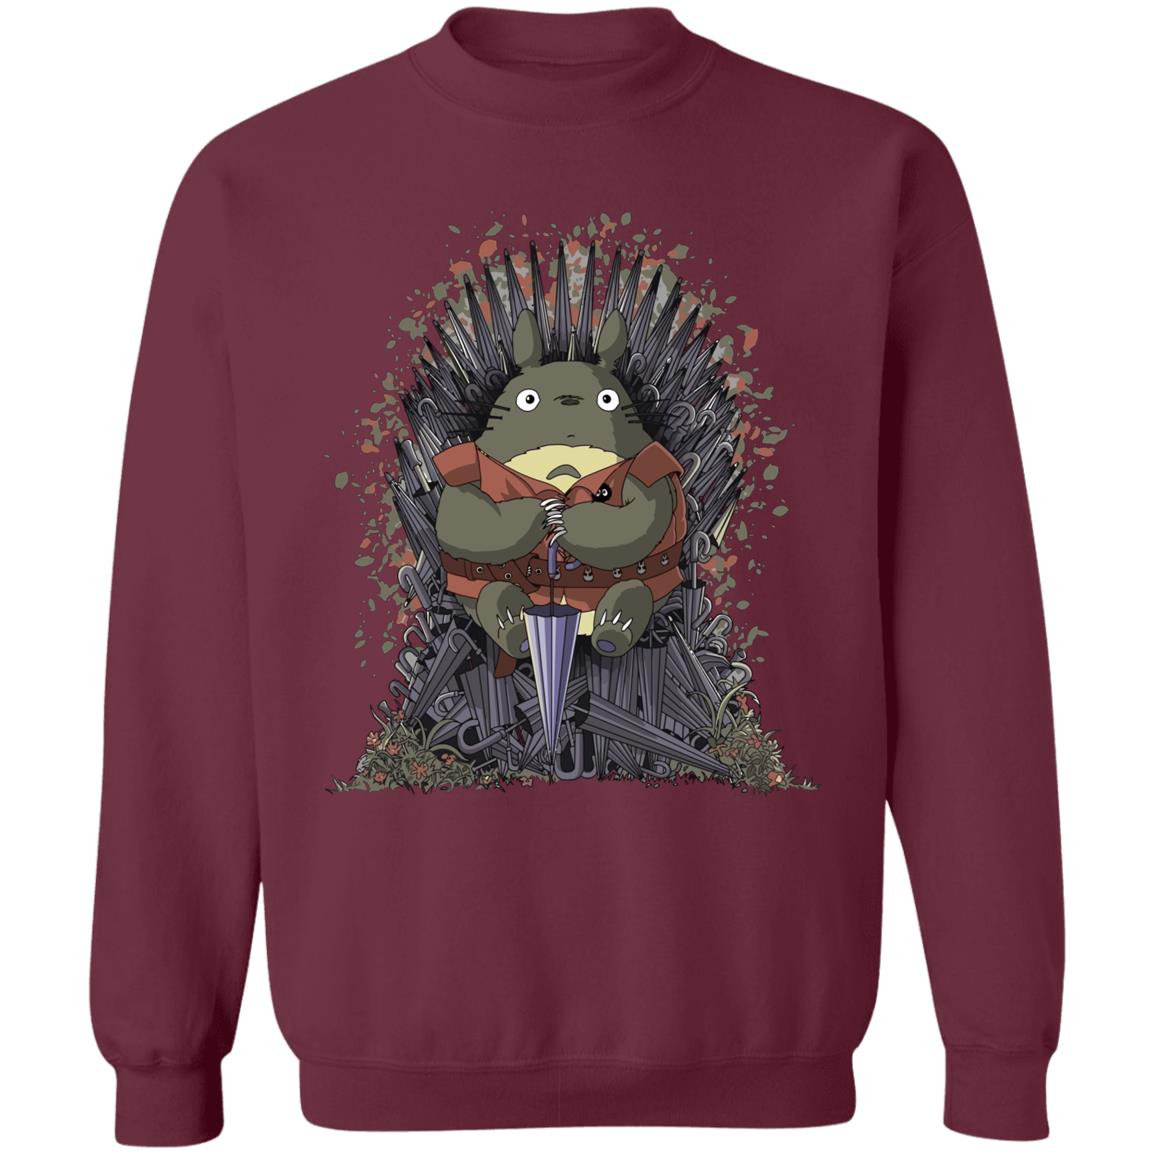 Totoro Game of Thrones Sweatshirt